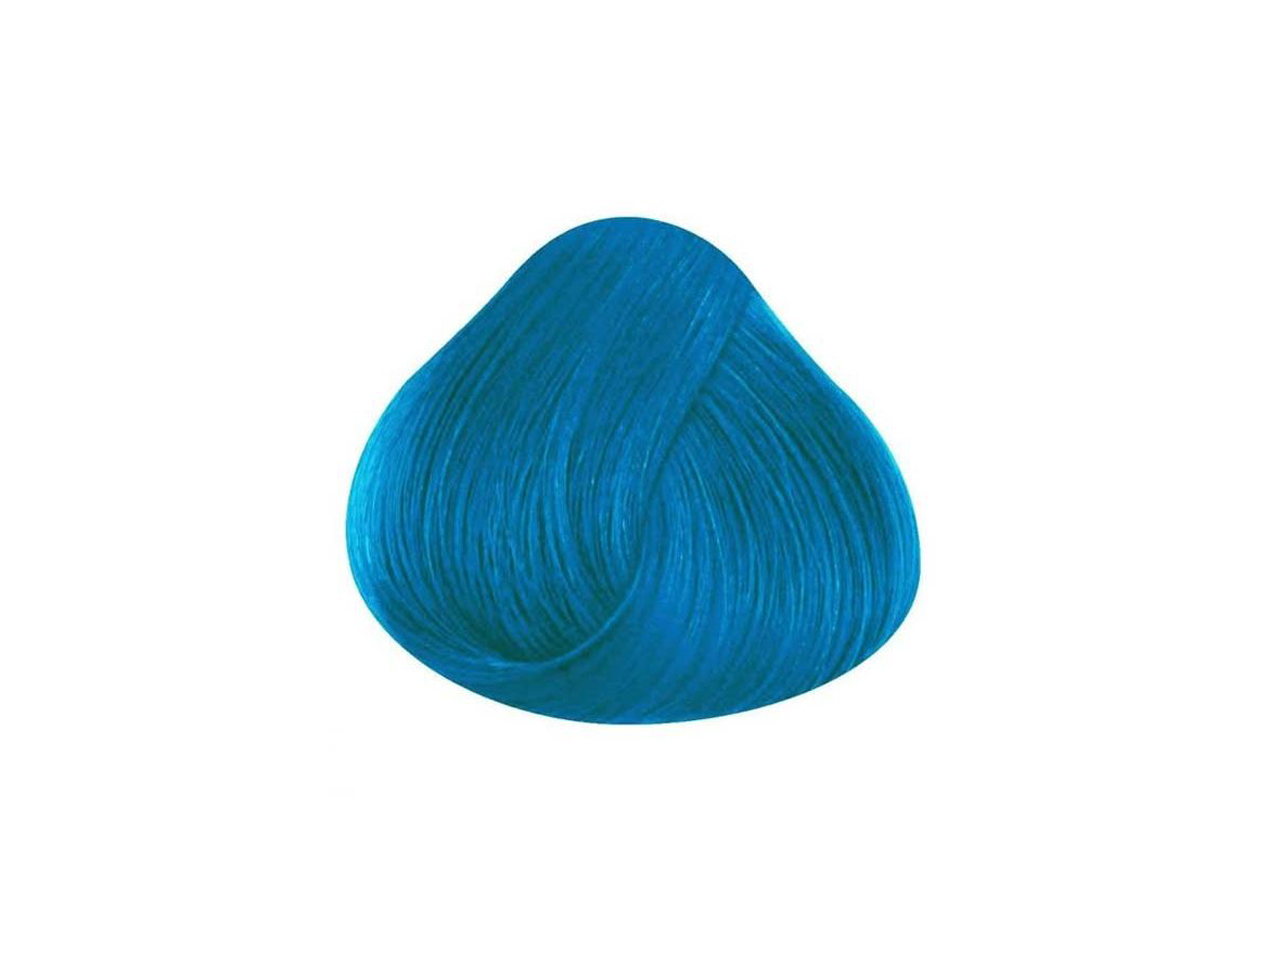 5. La Riche Directions Blue Hair Dye - wide 7